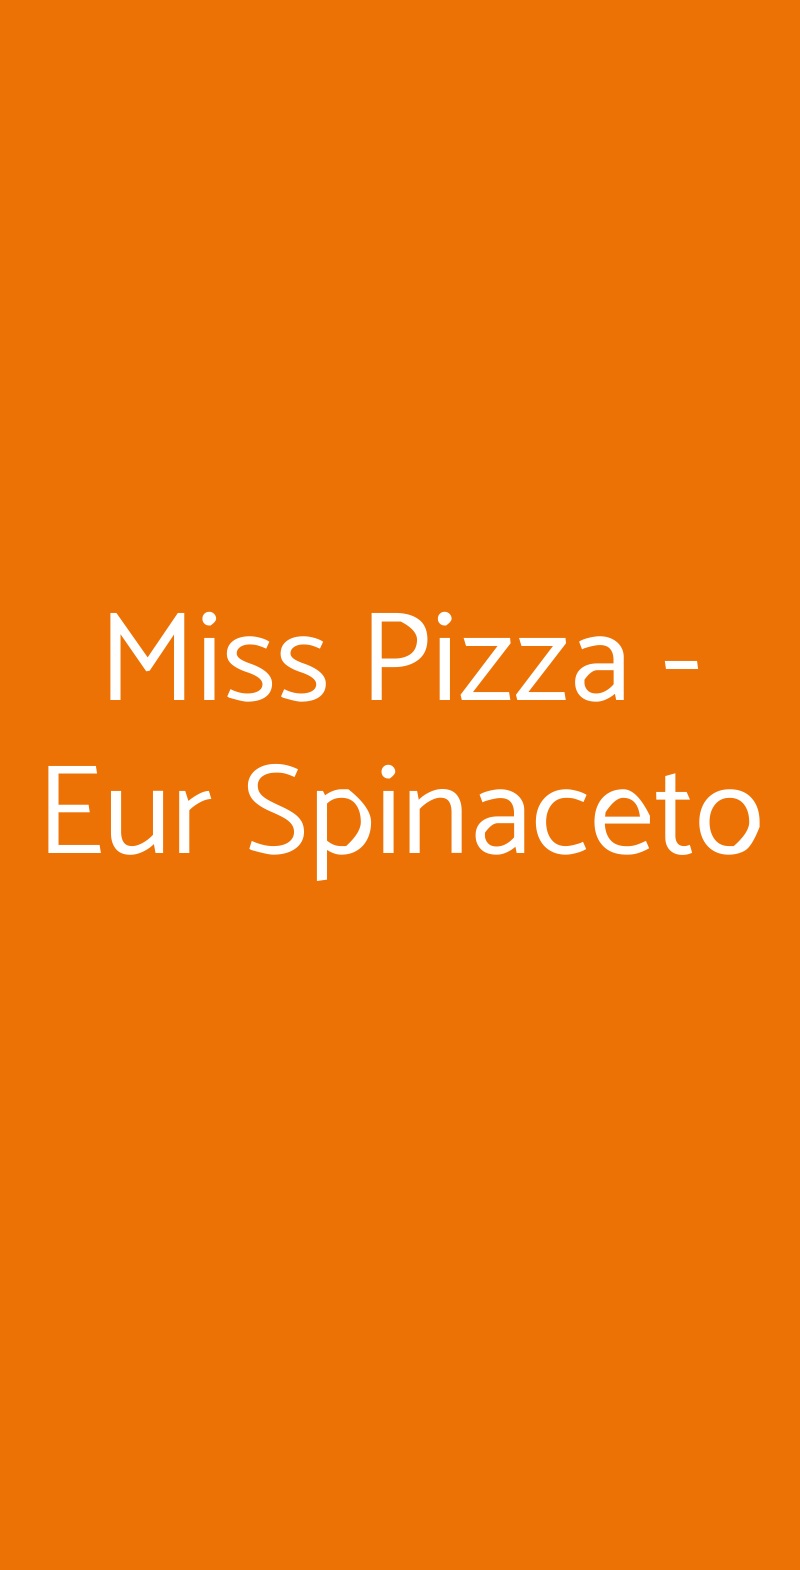 Miss Pizza - Eur Spinaceto Roma menù 1 pagina